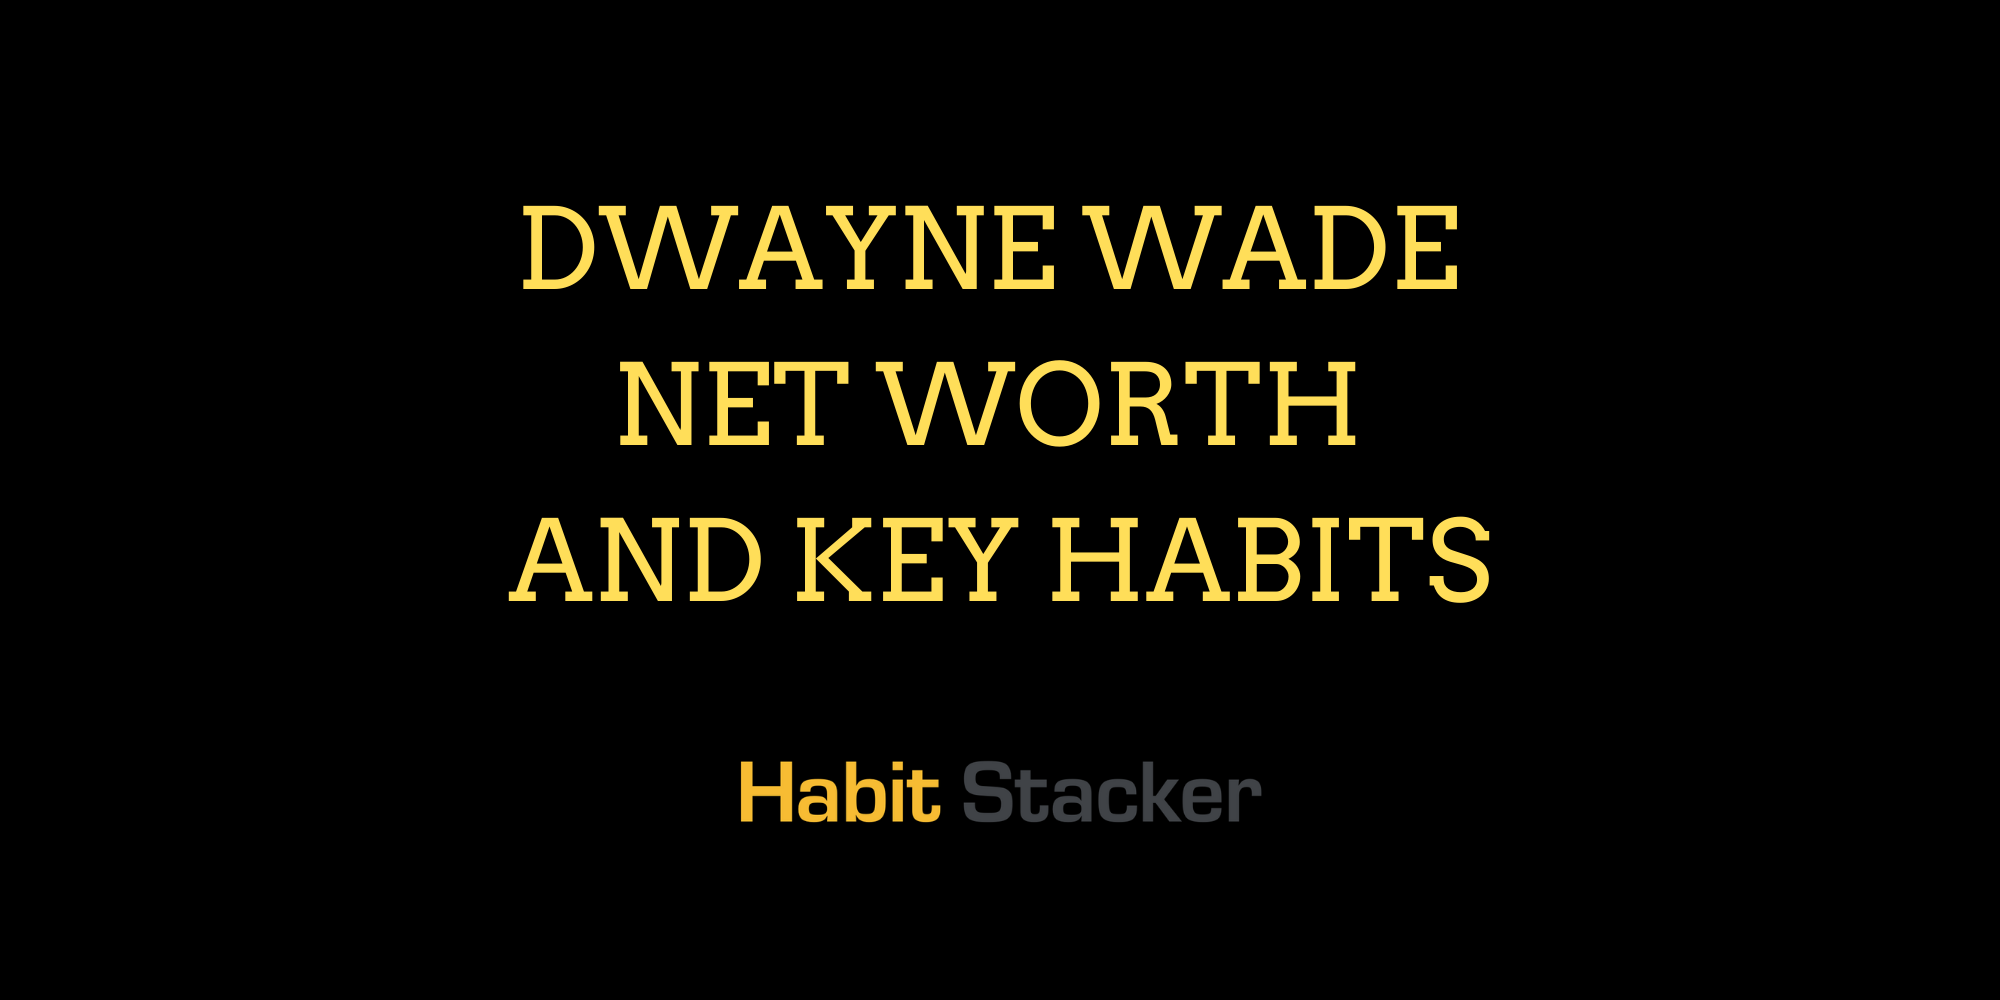 Dwayne Wade Net Worth and Key Habits